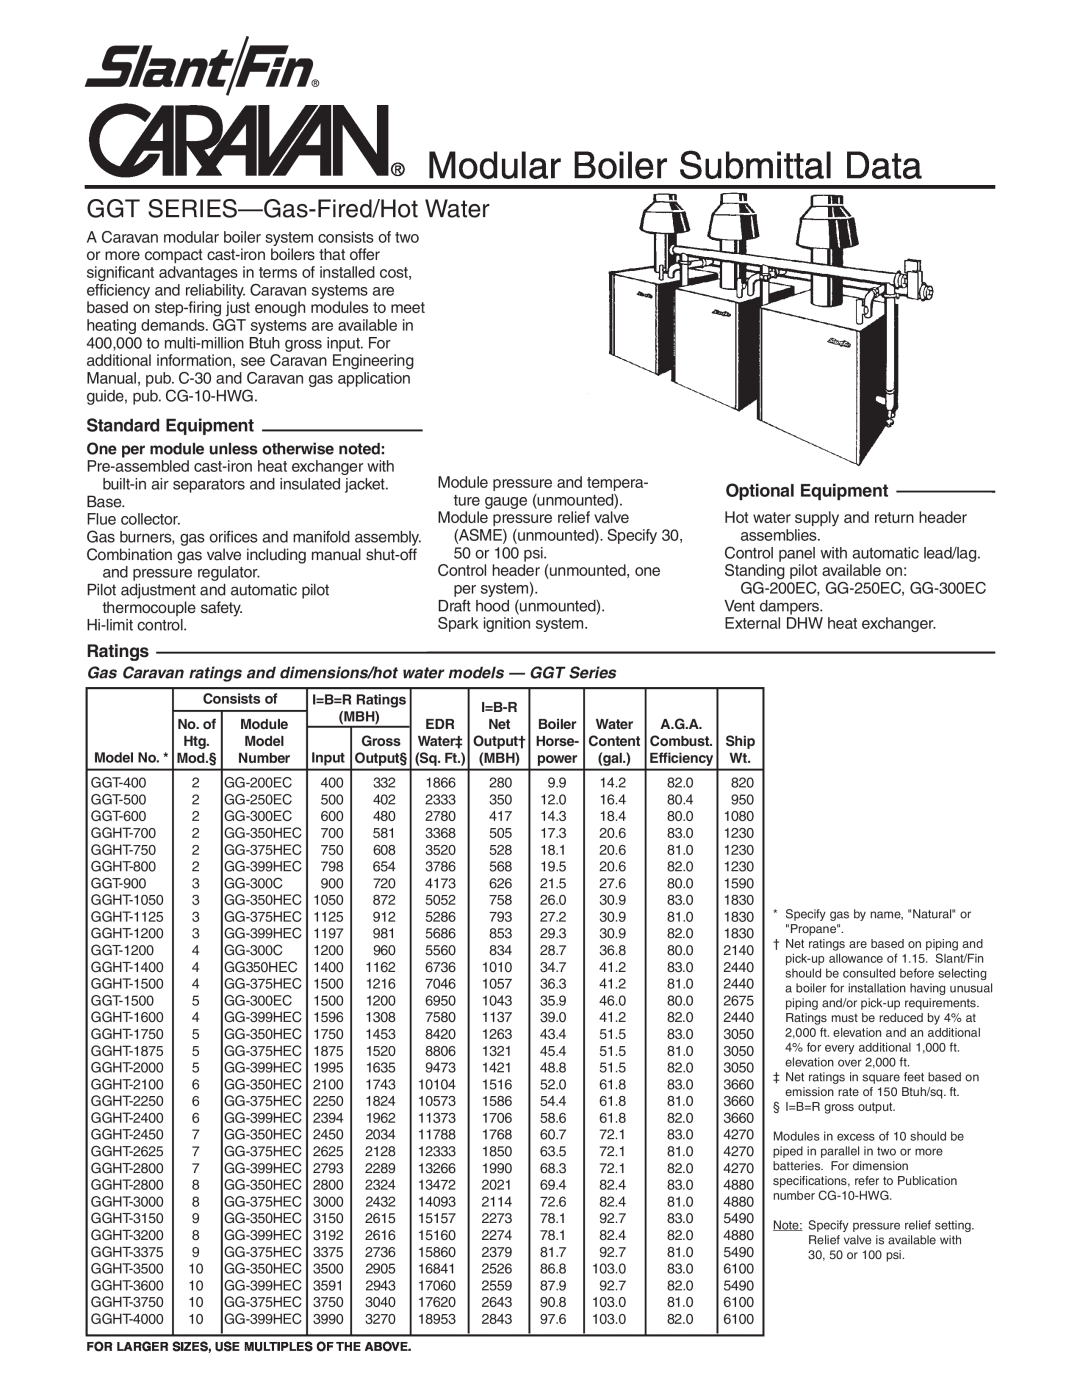 Slant/Fin GGT Series dimensions Standard Equipment, Optional Equipment, Ratings, Modular Boiler Submittal Data 